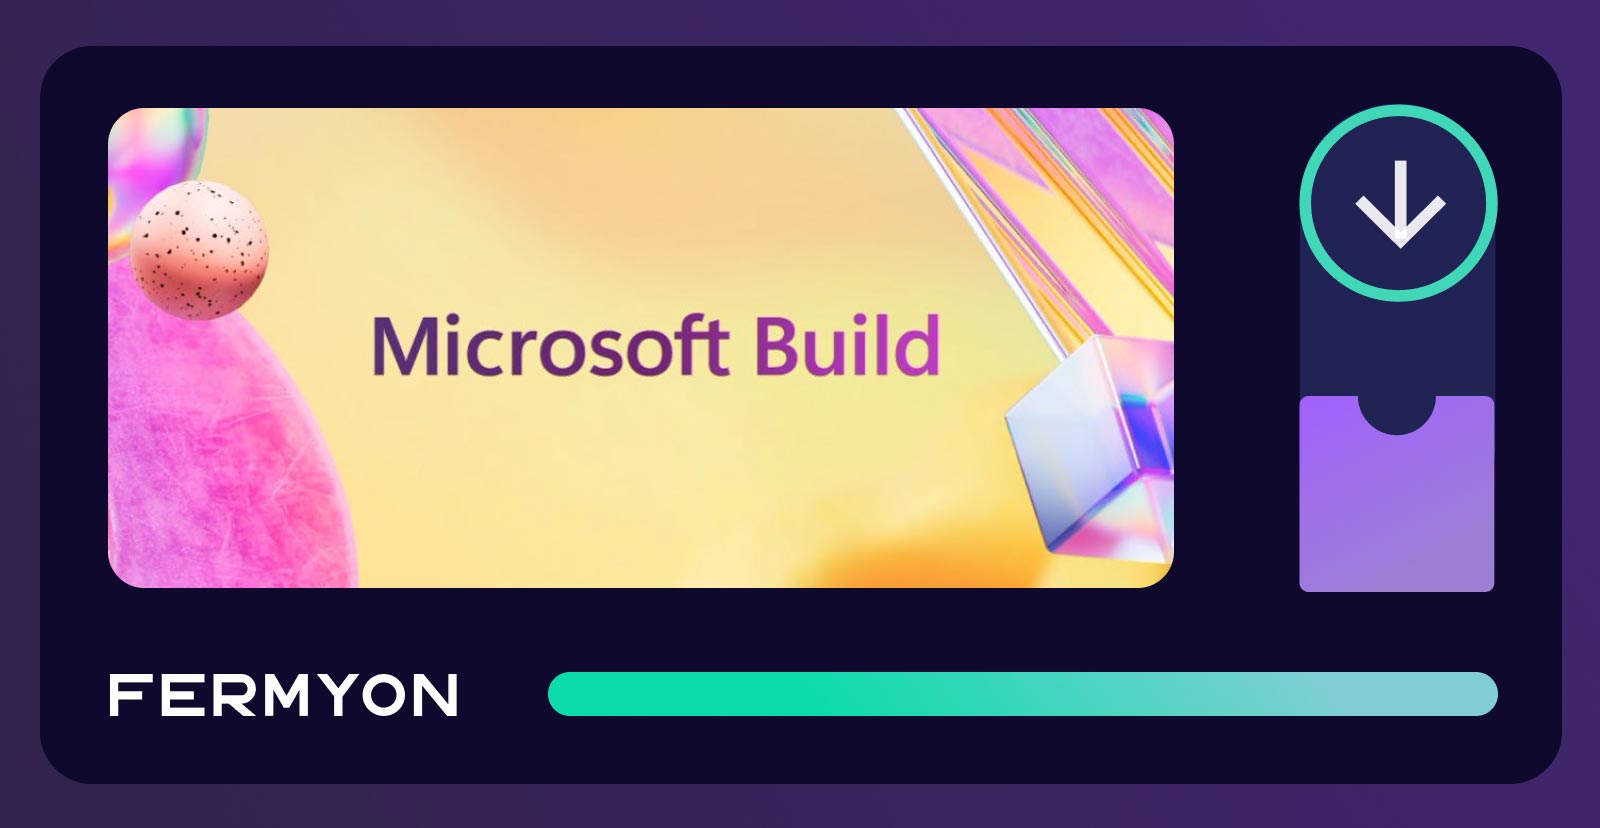 Visit Fermyon at Microsoft Build